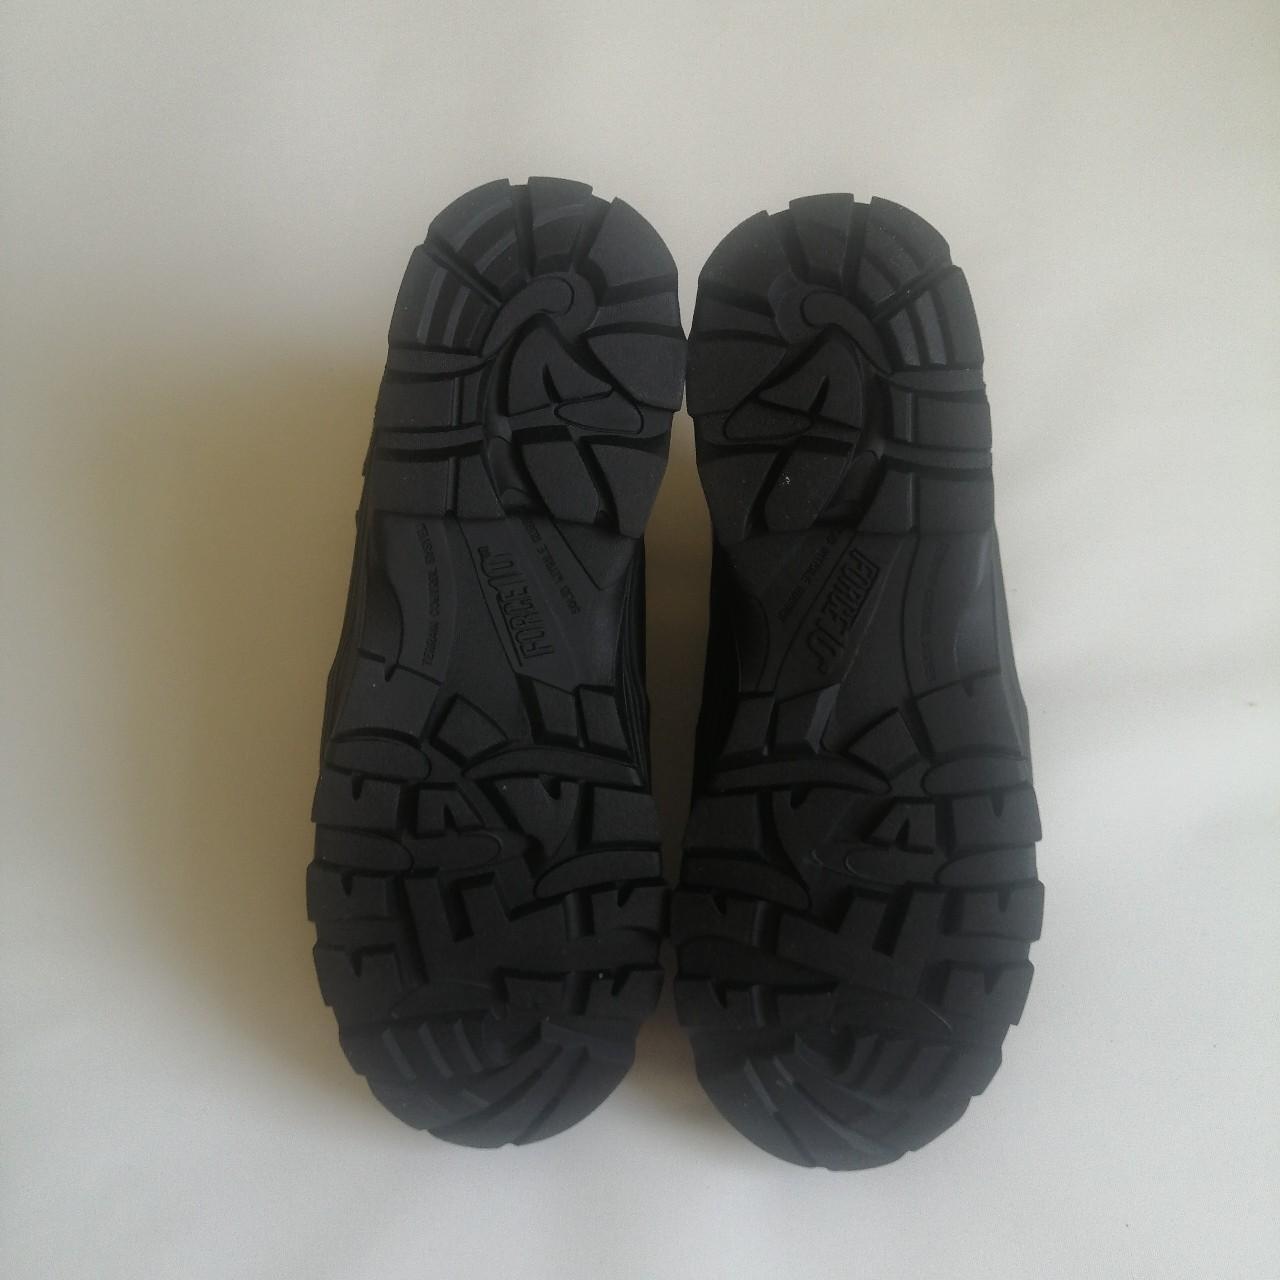 Rock Fall Mens Safety Black Waterproof Boots Size UK... - Depop